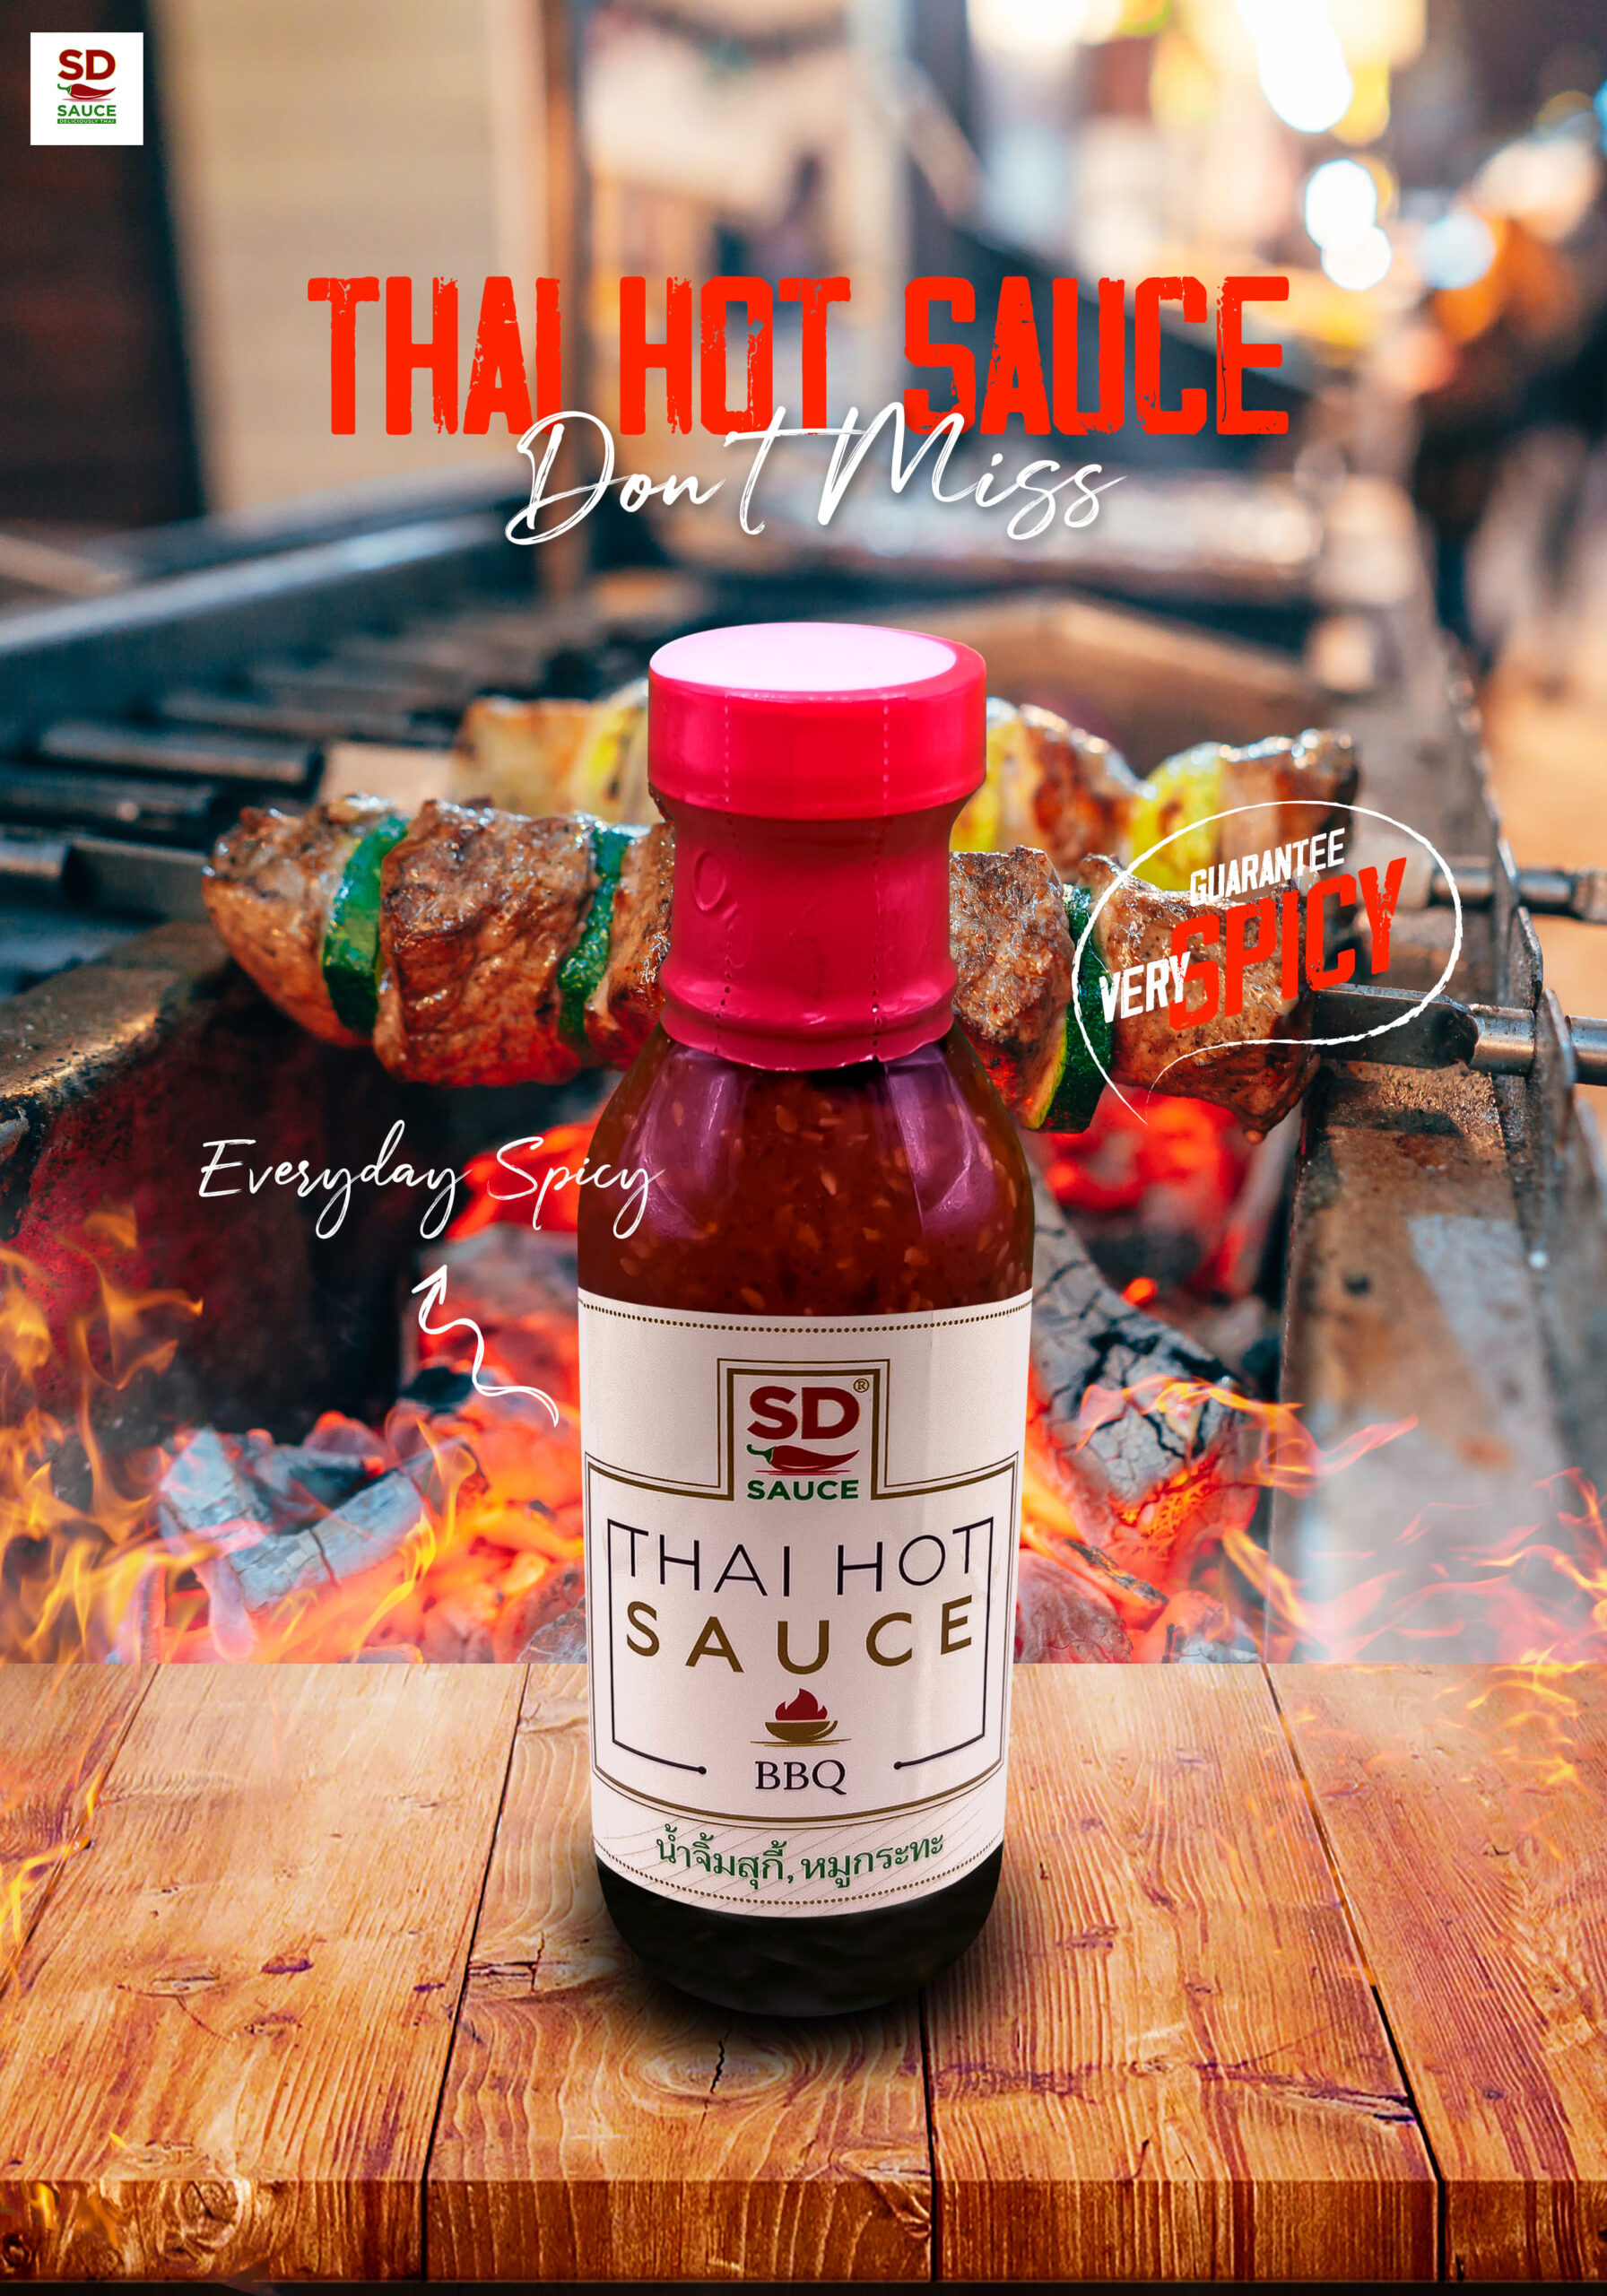 Thai Hot Sauce - by SD Sauce